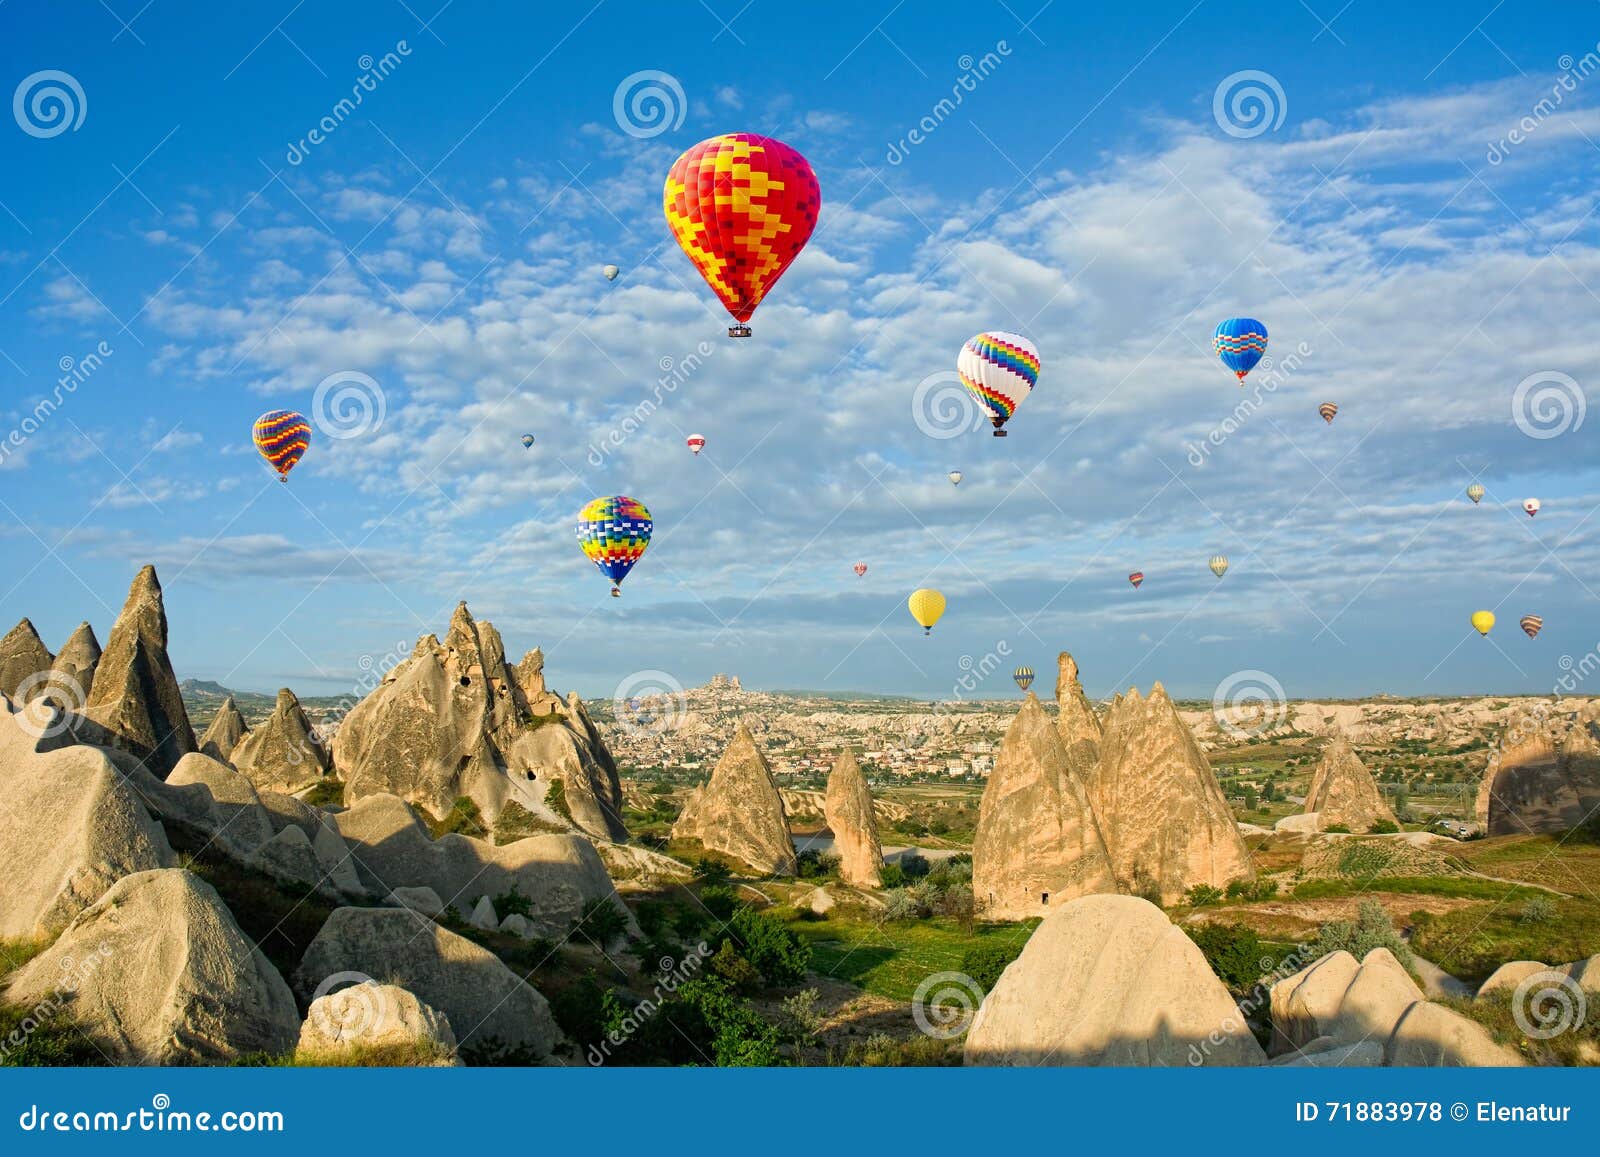 colorful hot air balloons flying, cappadocia, anatolia, turkey.